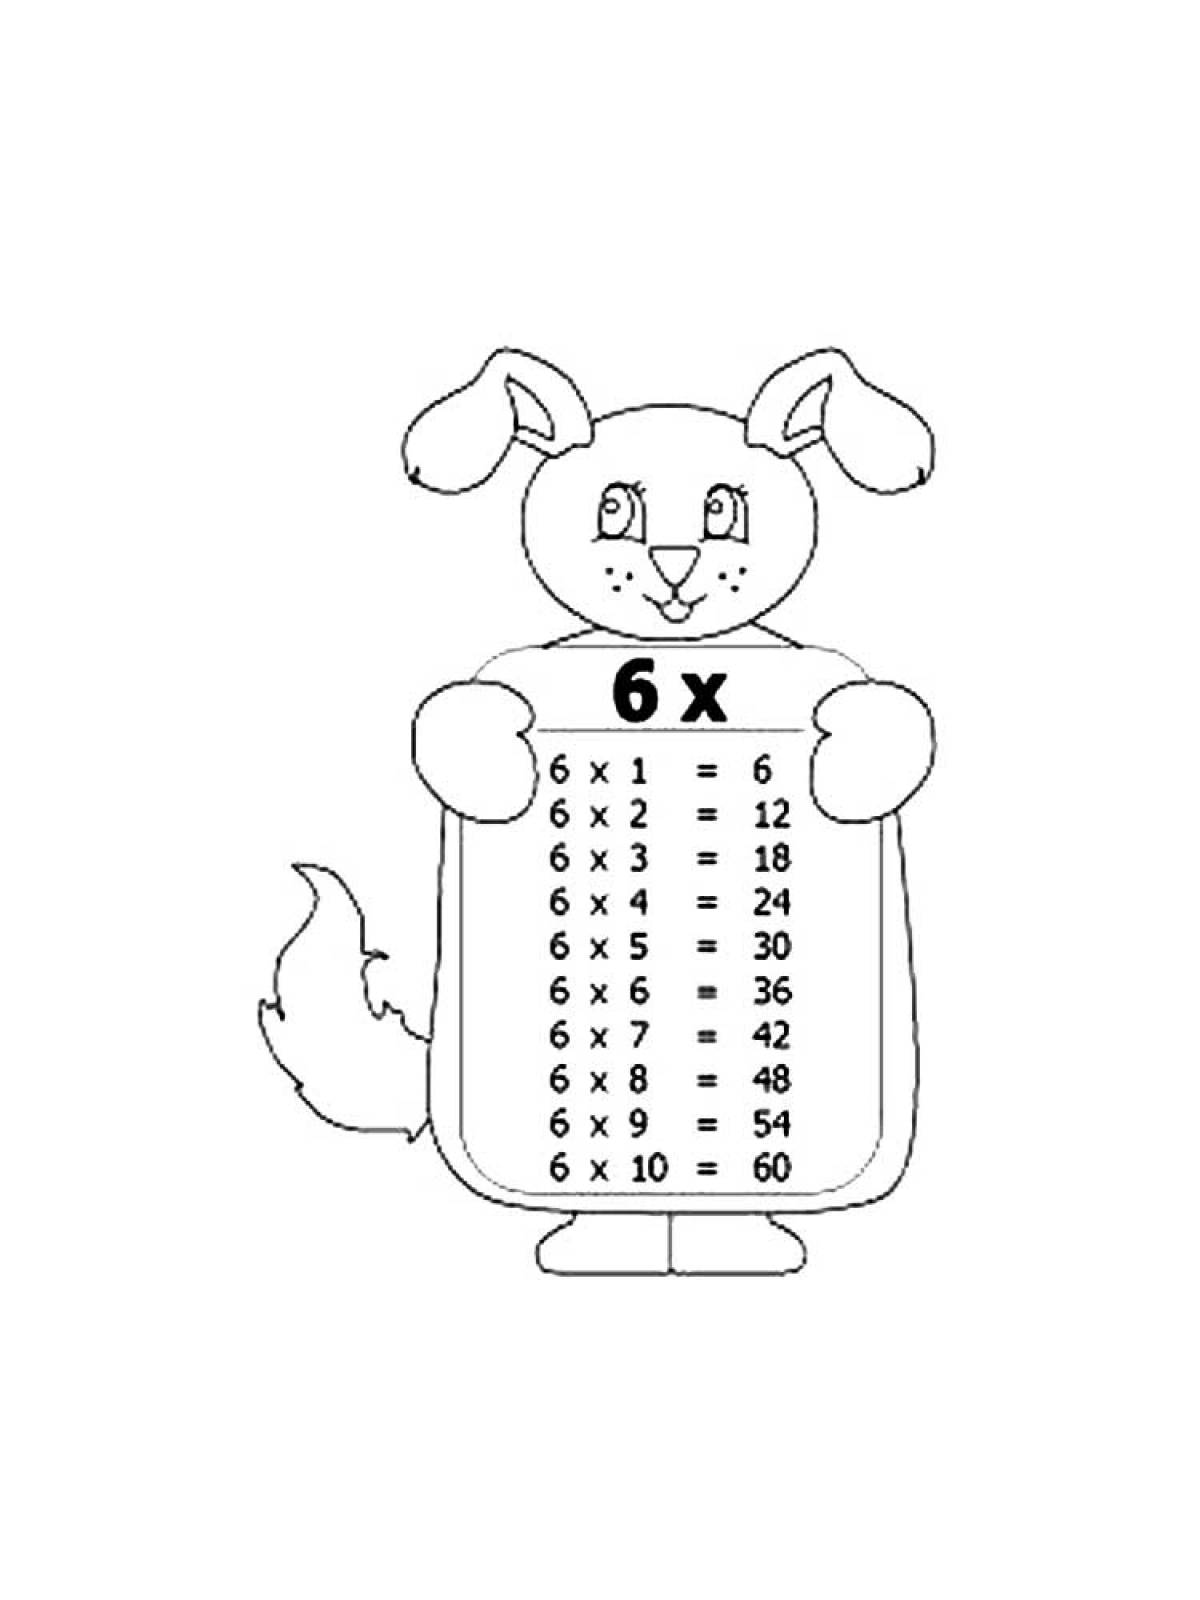 Multiplication table 4